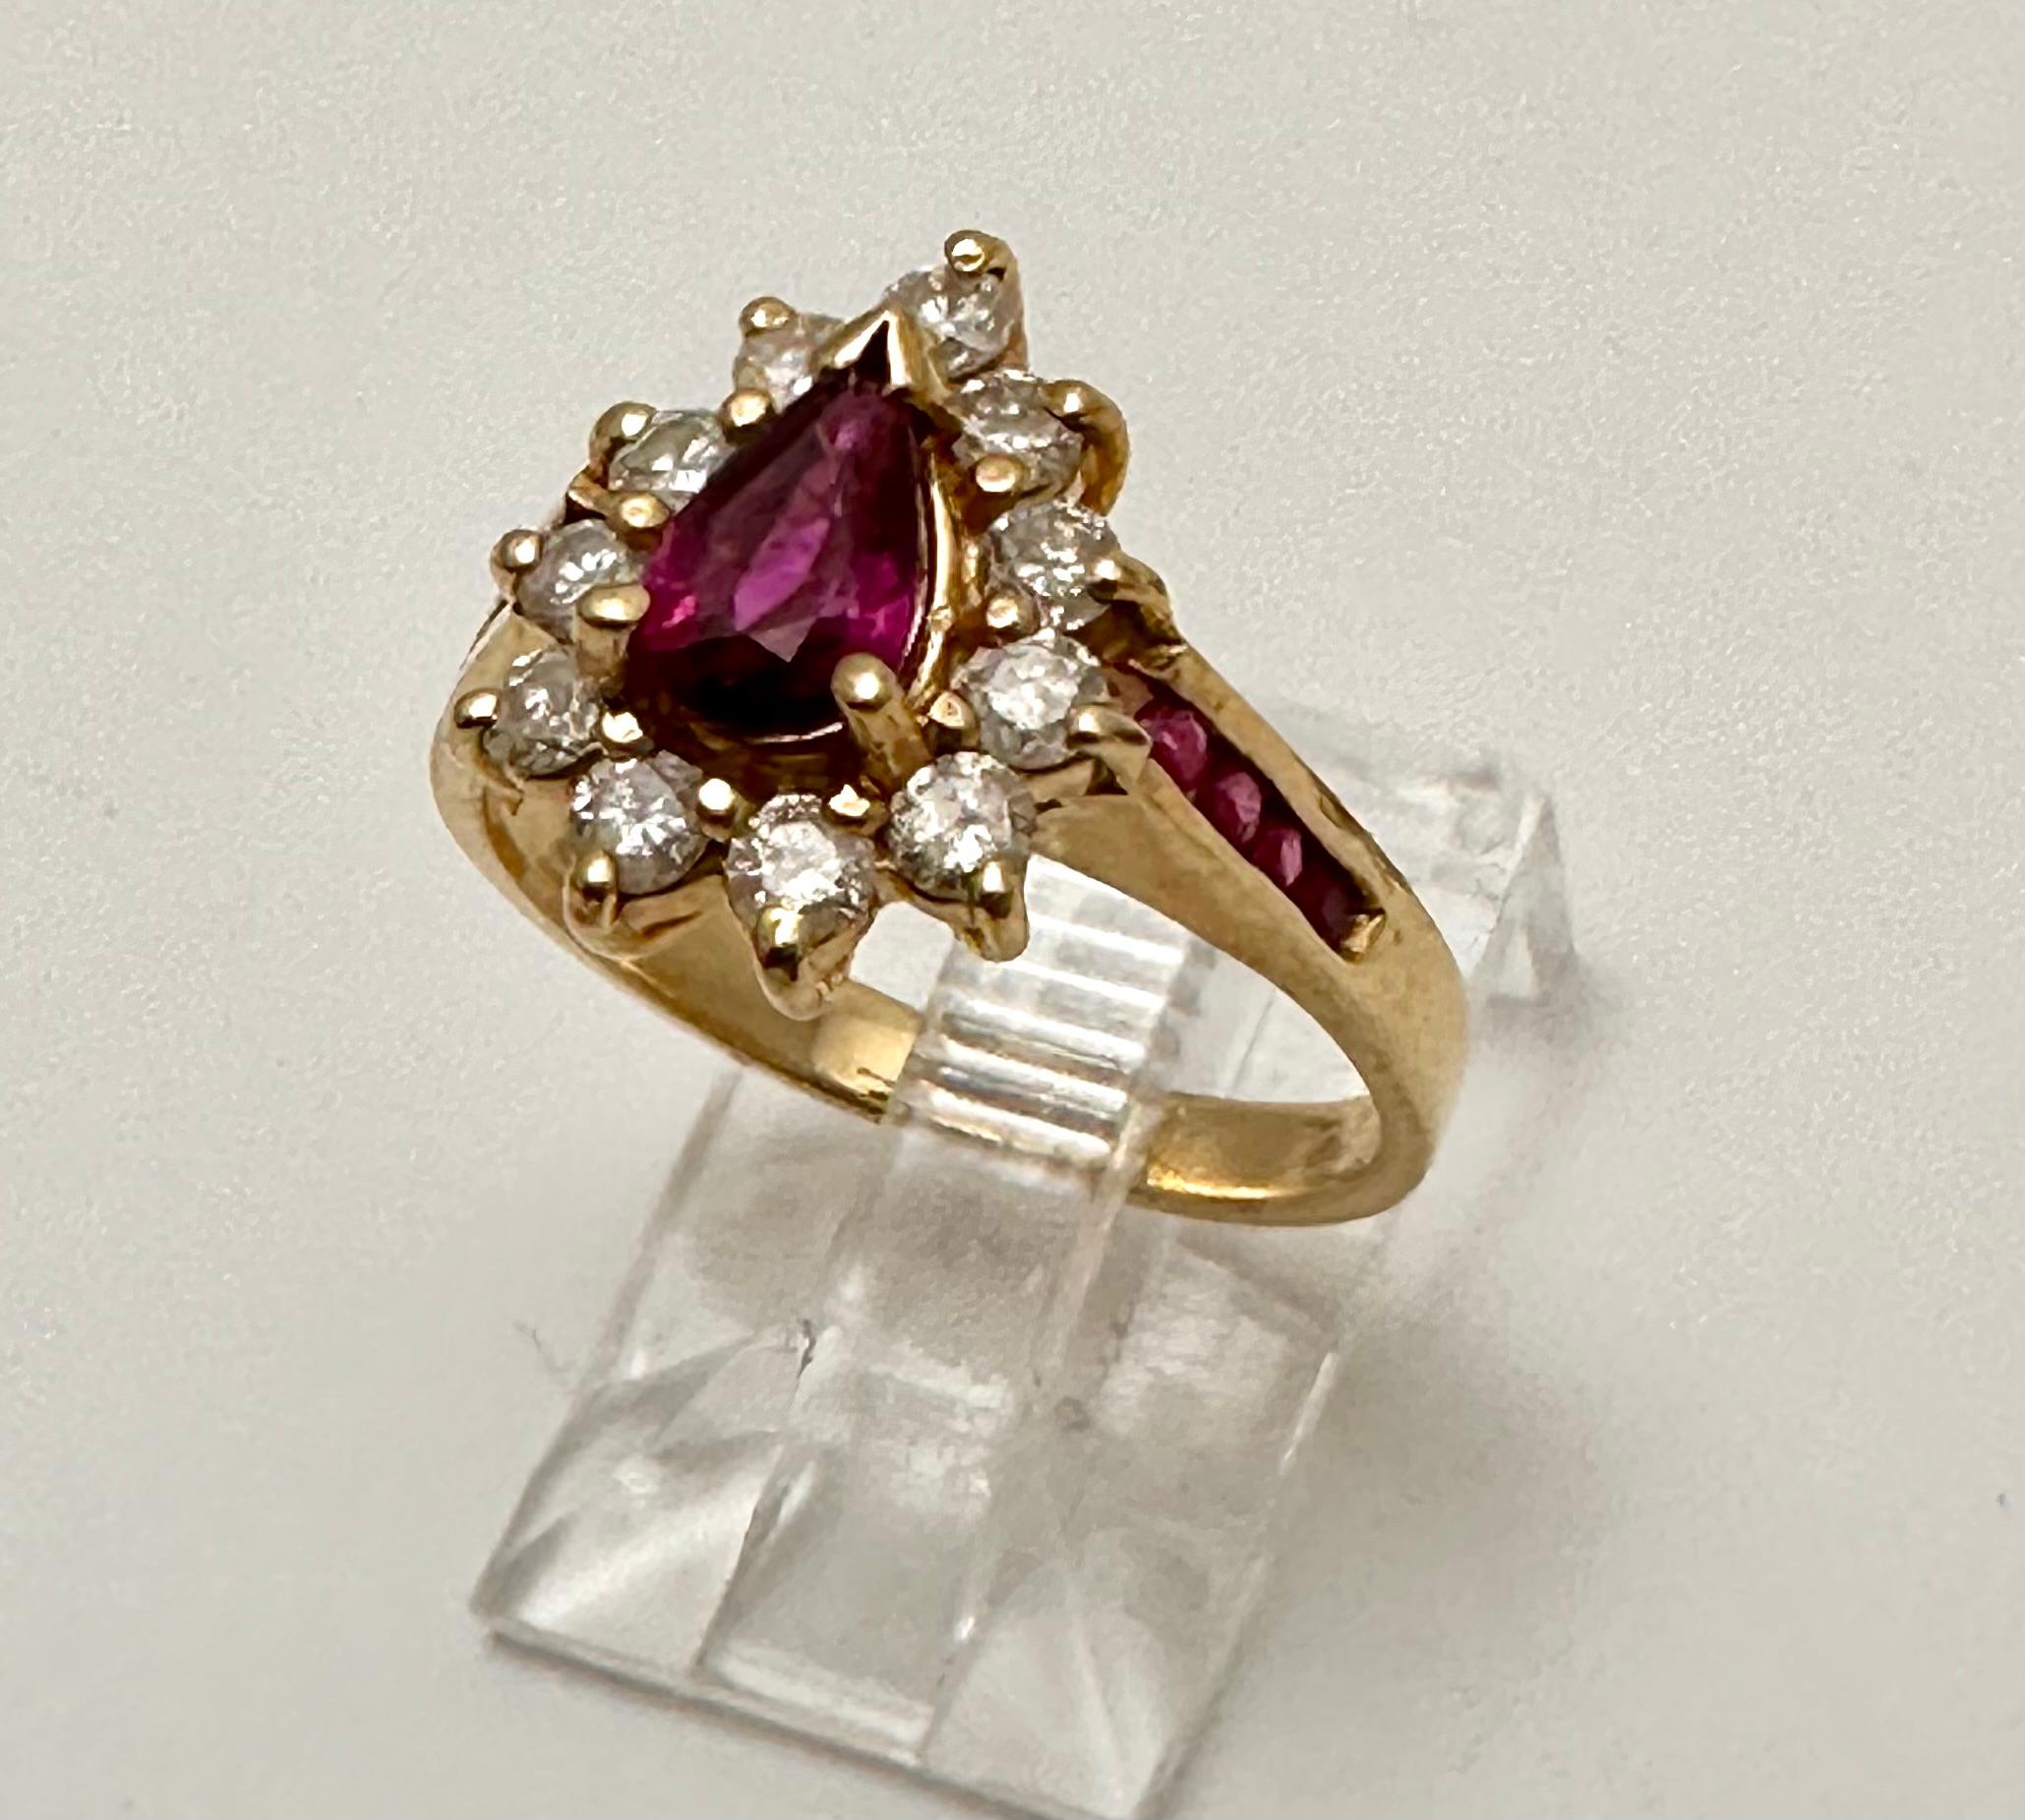 Women's 14k Yellow Gold 5mm x 7mm Pear Shape Ruby w/Surrounding Diamonds Ring Sz 6 1/2 For Sale